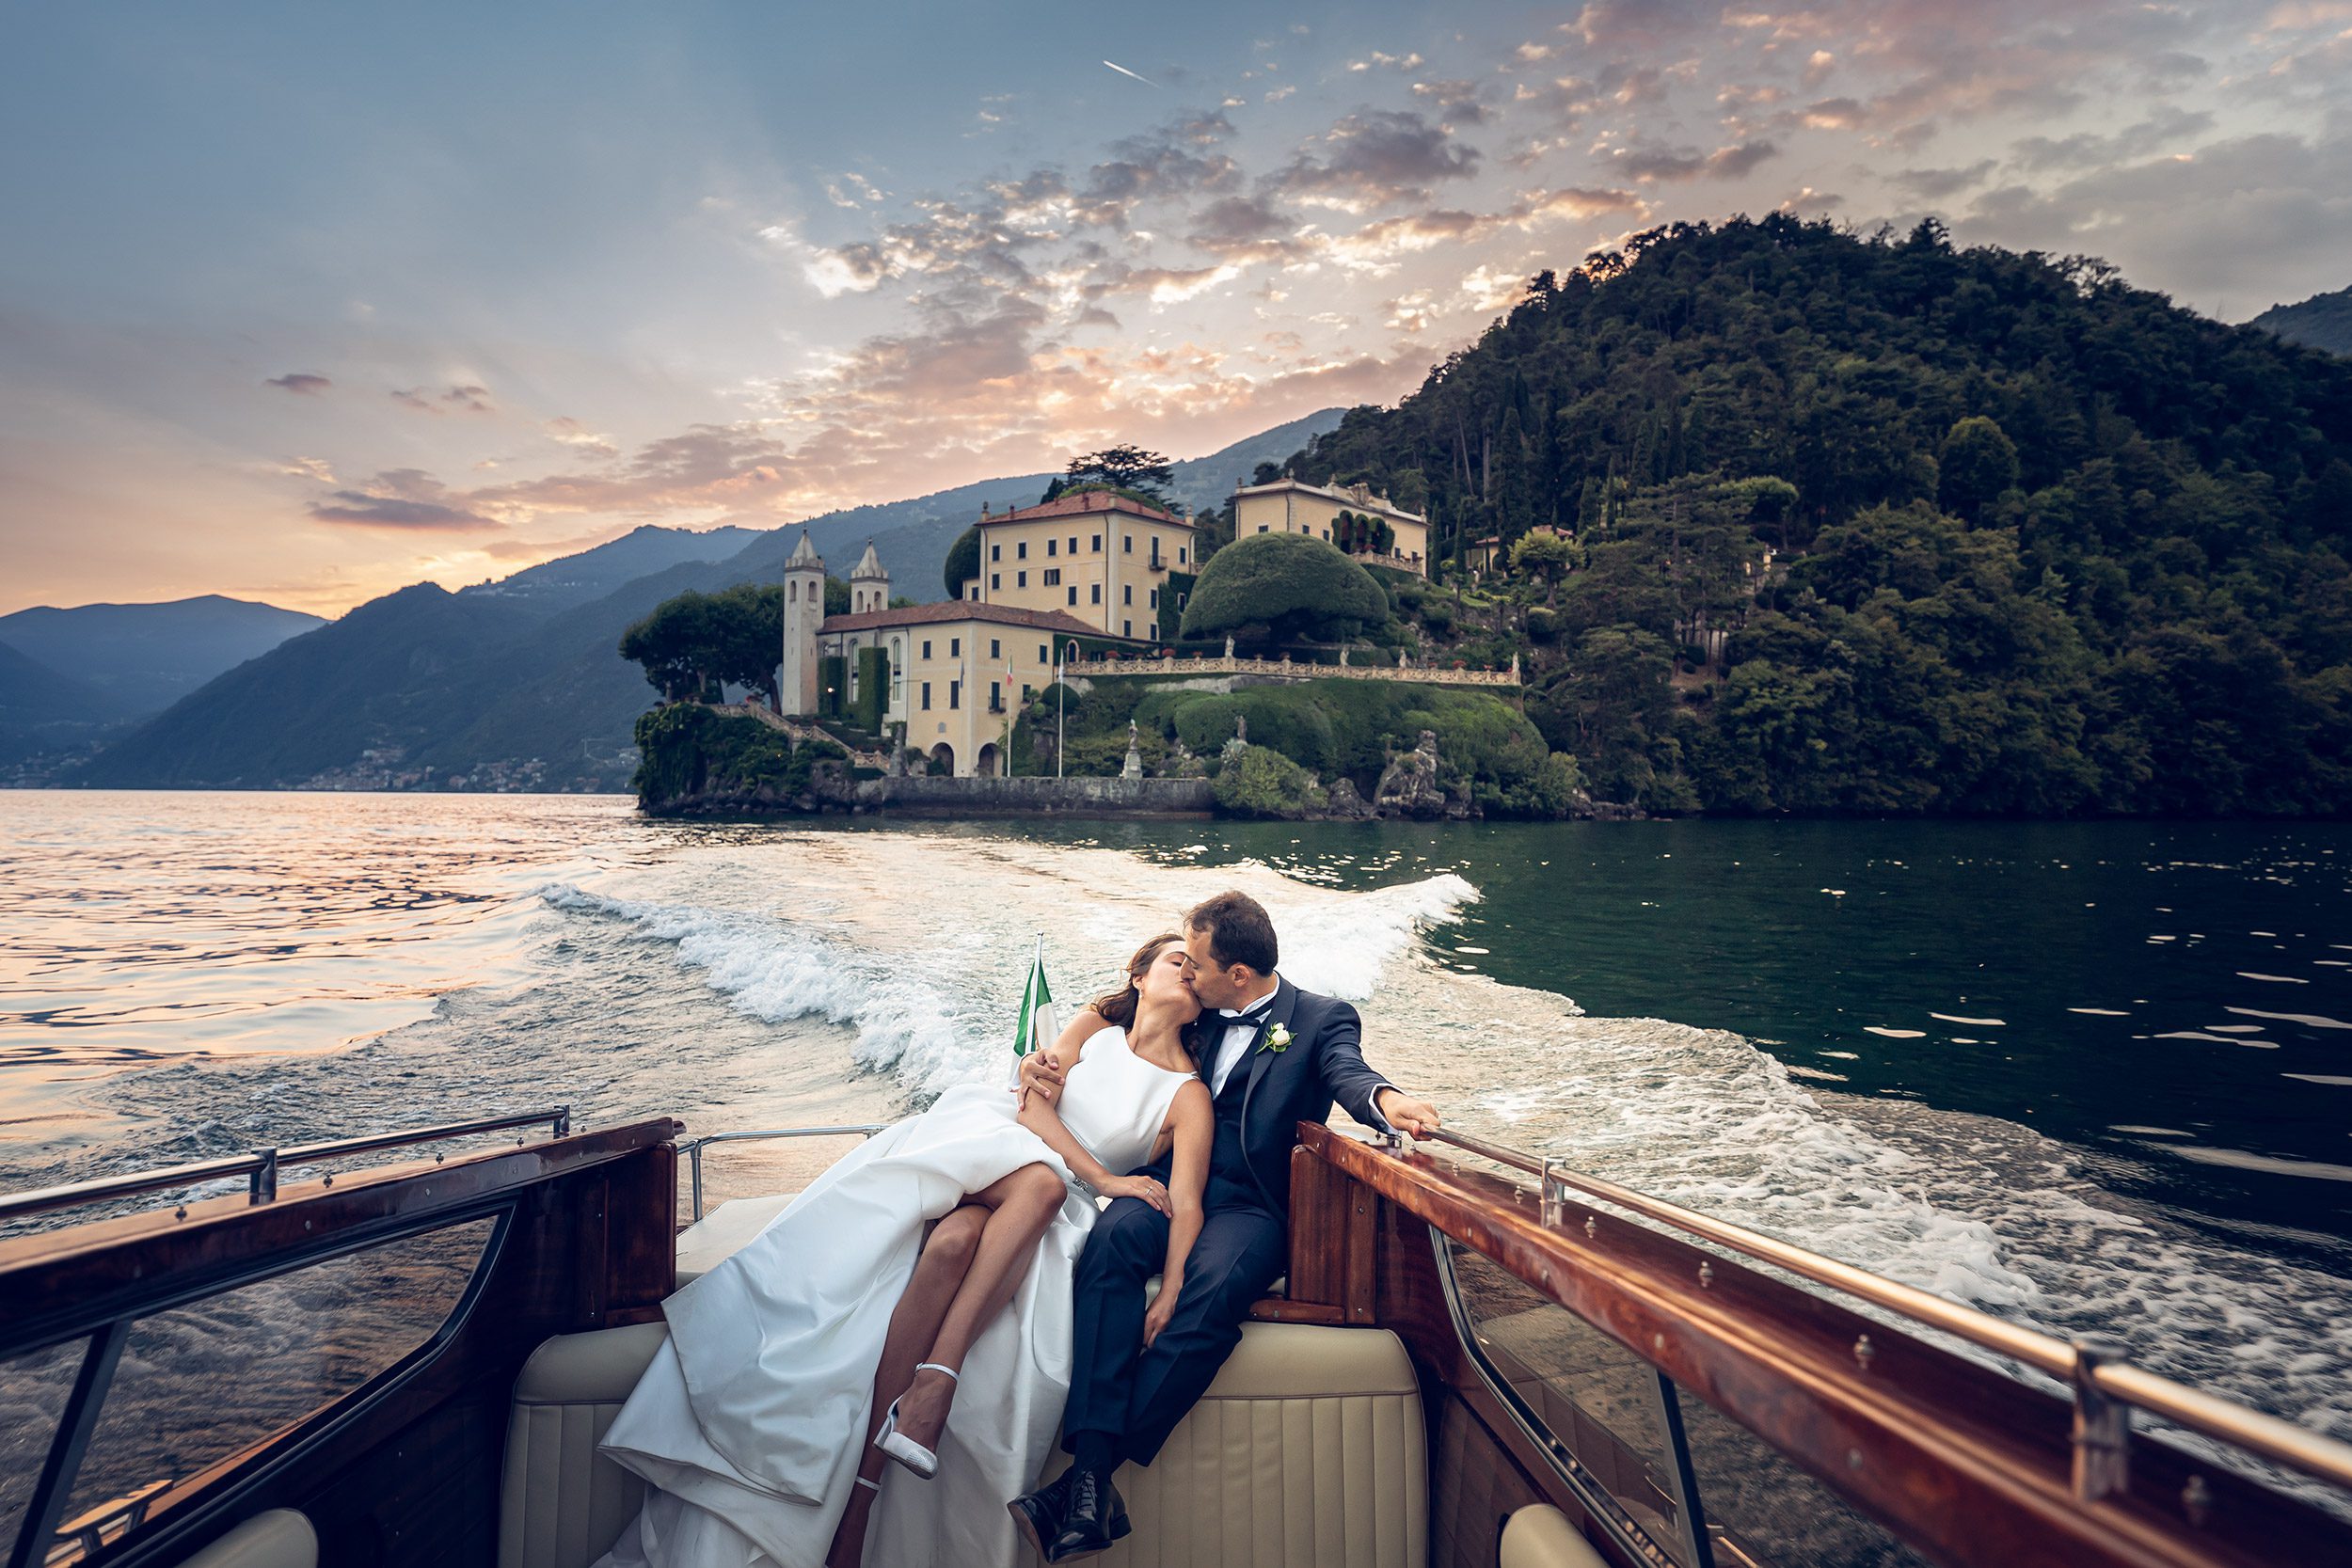 057 fotografo matrimonio reportage real wedding villa balbianello como lake italy